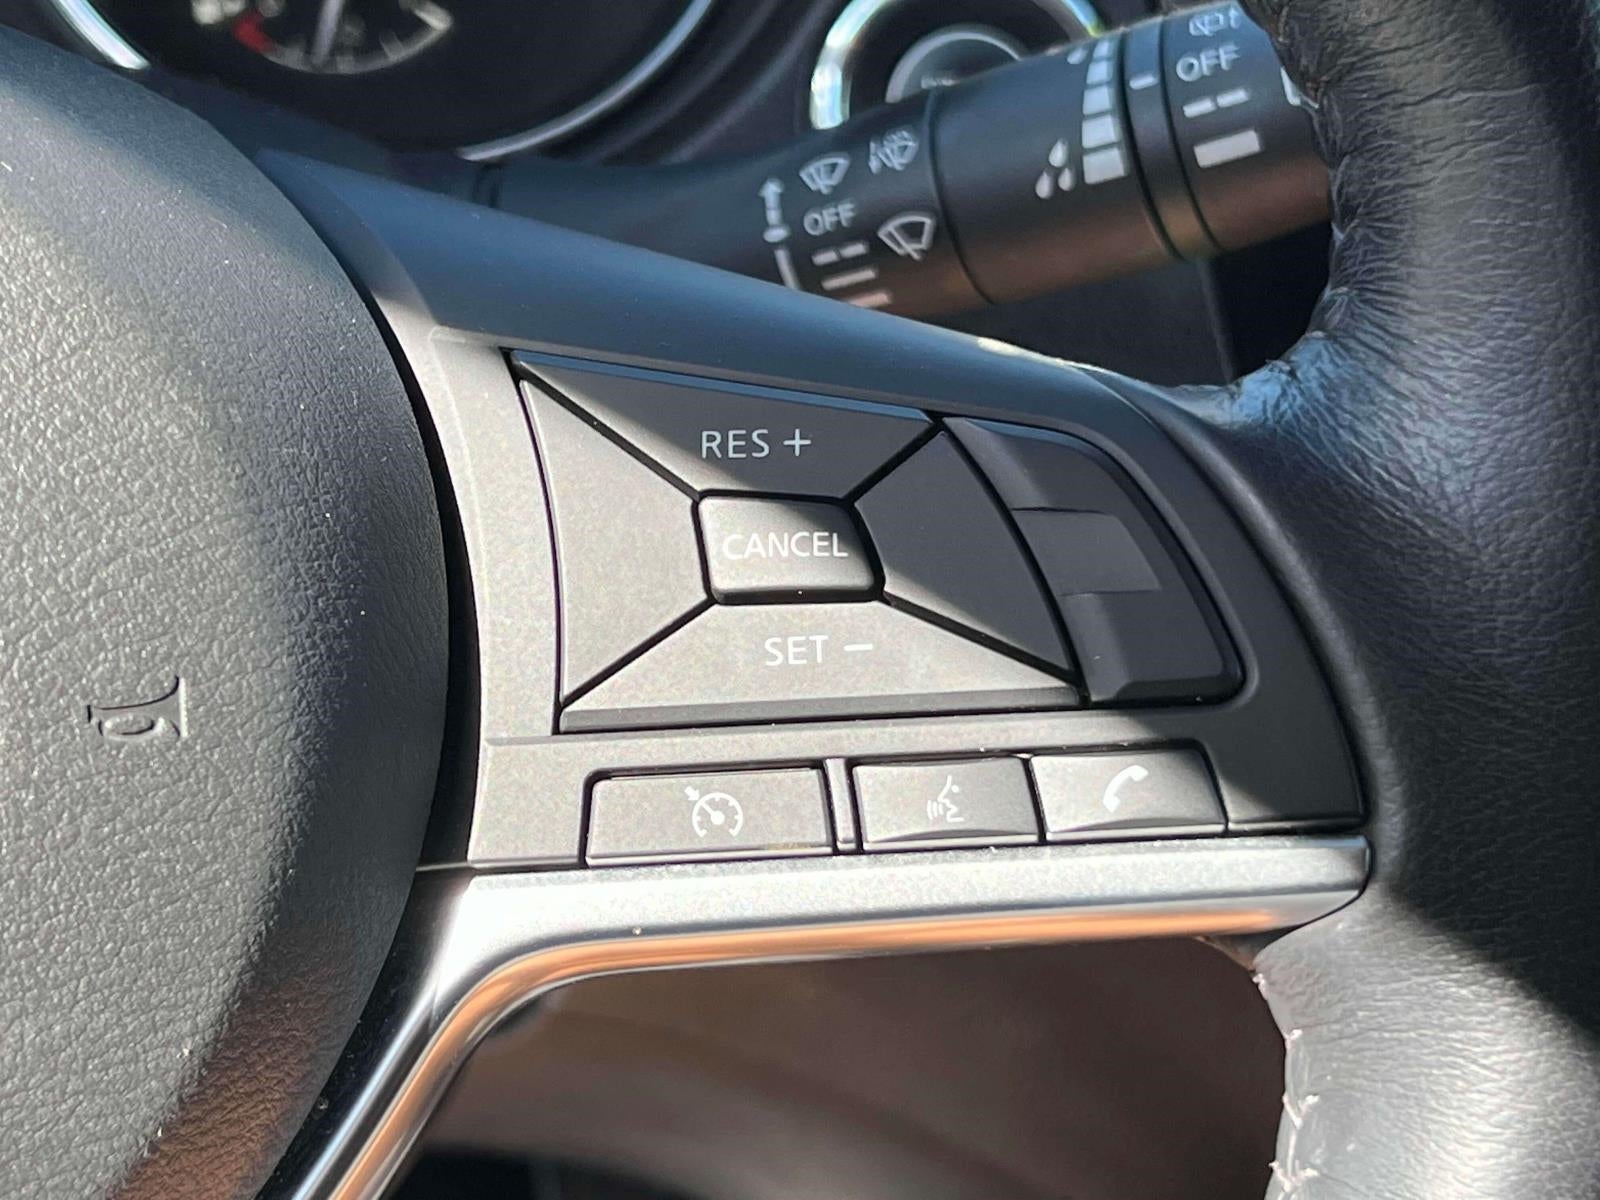 2018 Nissan Rogue AWD SV